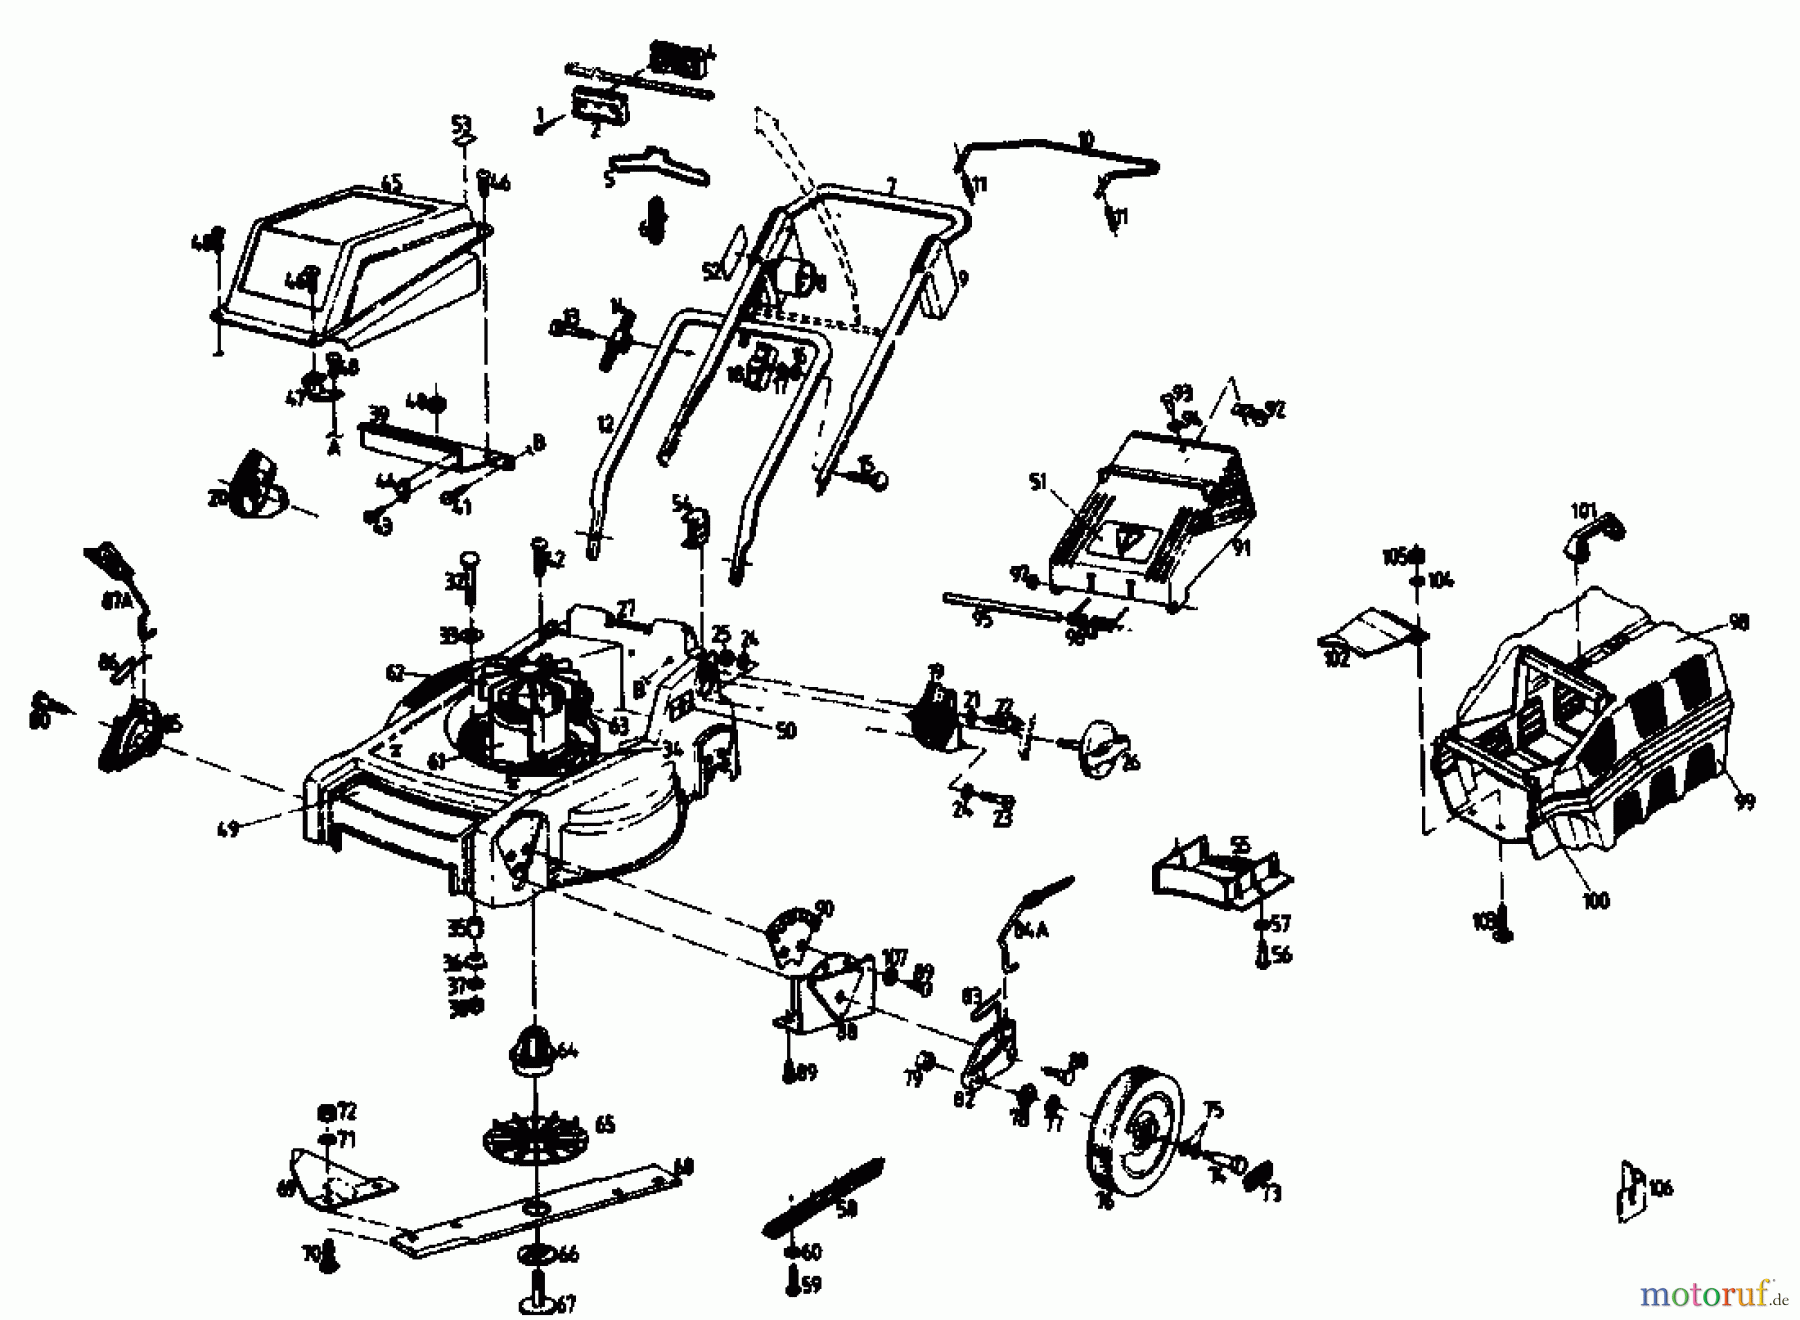  Gutbrod Electric mower HE 47 LS 02650.01  (1989) Basic machine